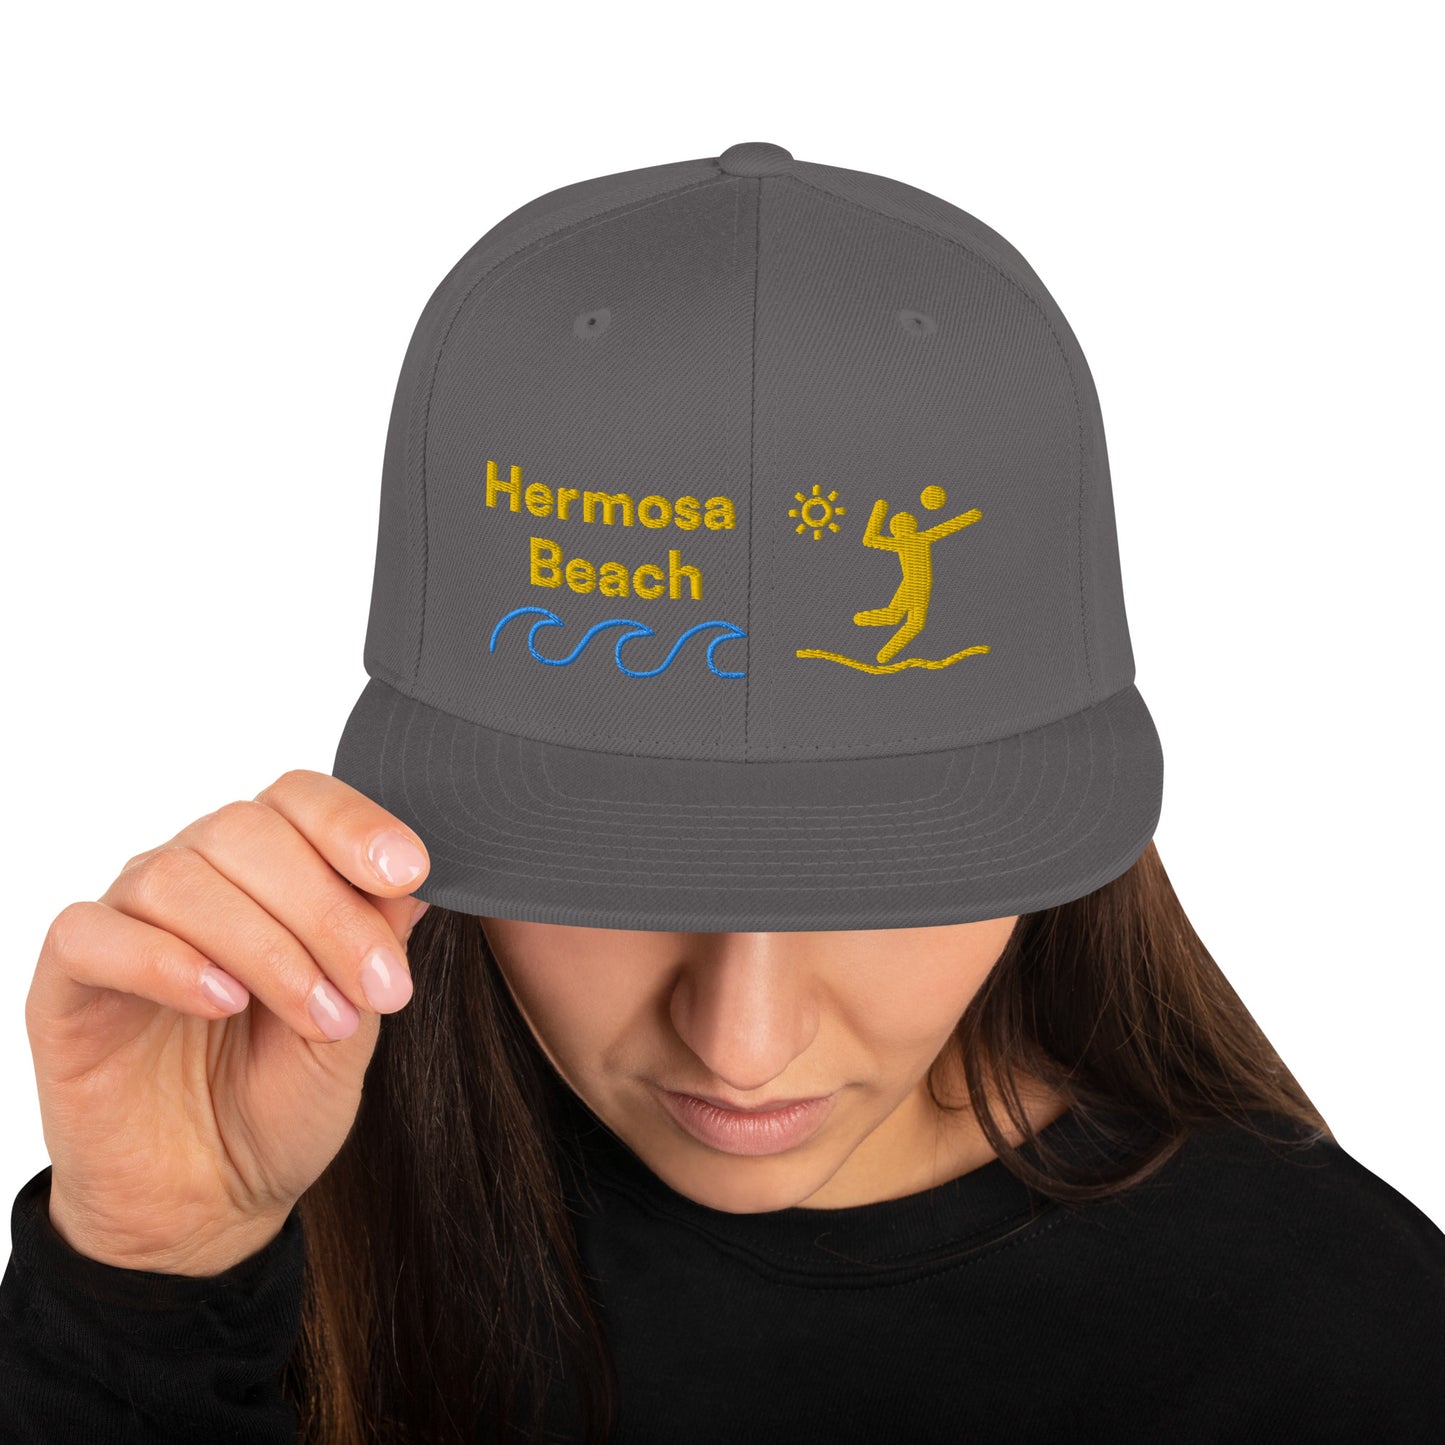 Hermosa Beach - California - South Bay - Snapback Hat - Volleyball Style